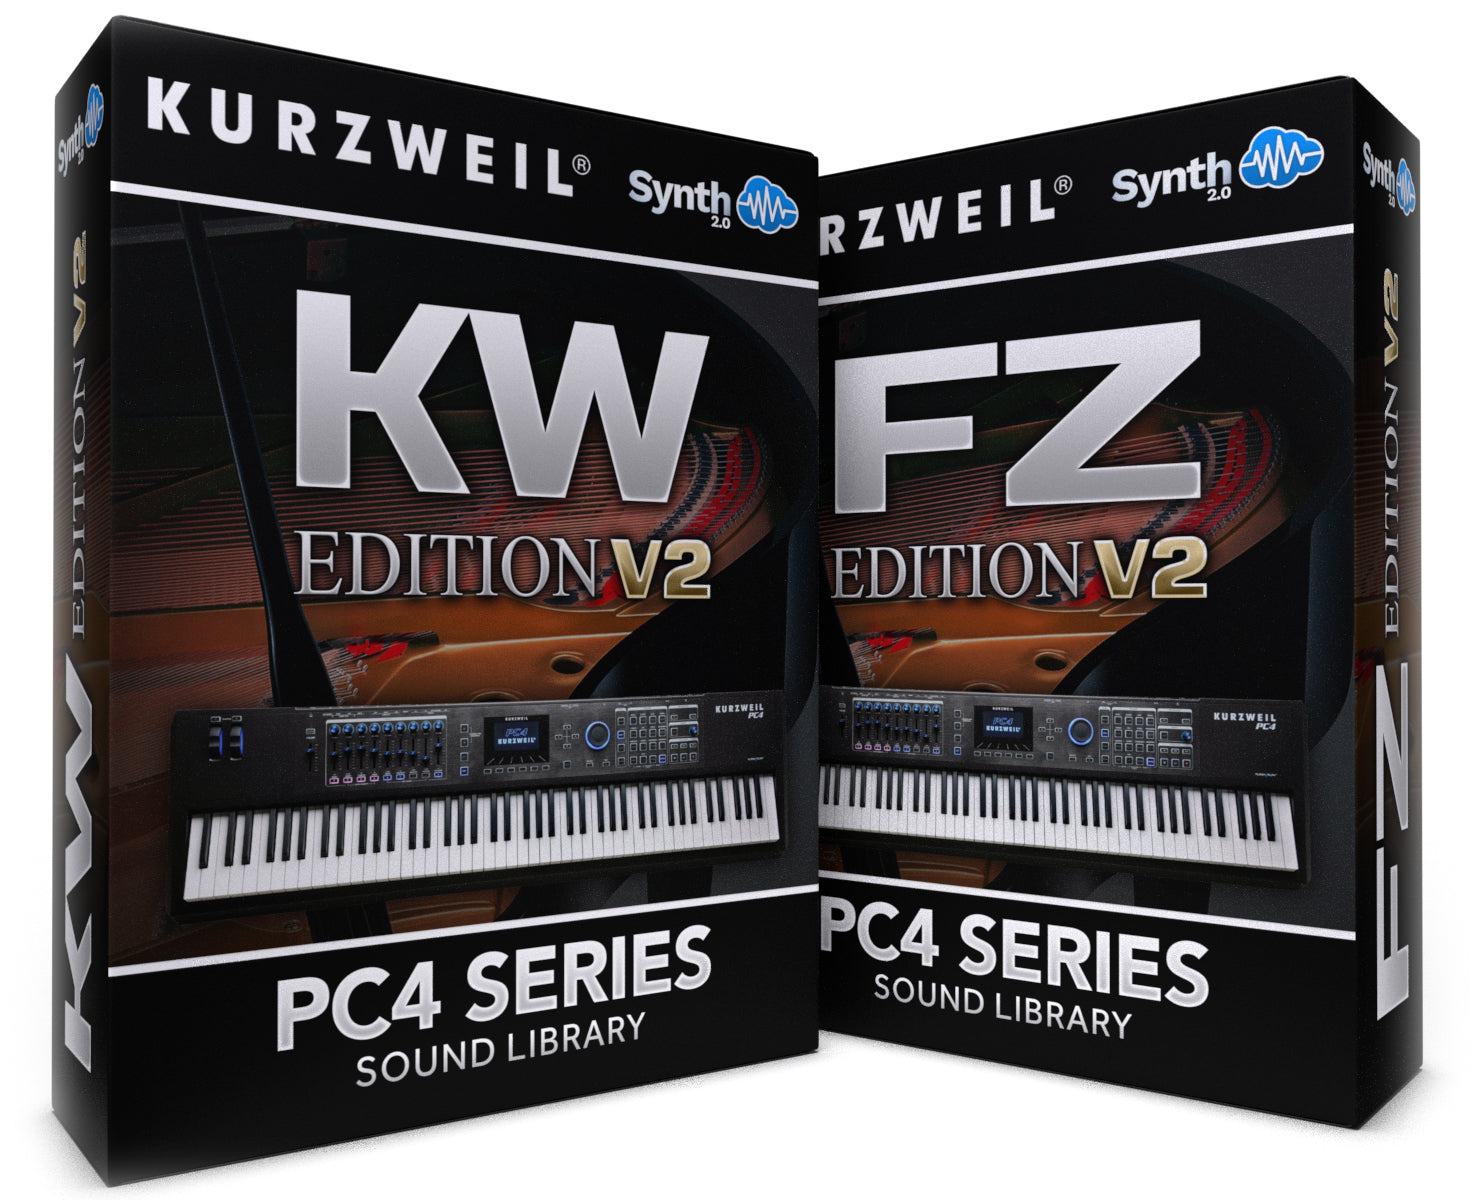 DRS051 - ( Bundle ) - KW Edition V2 + FZ Edition V2 - Kurzweil PC4 Series